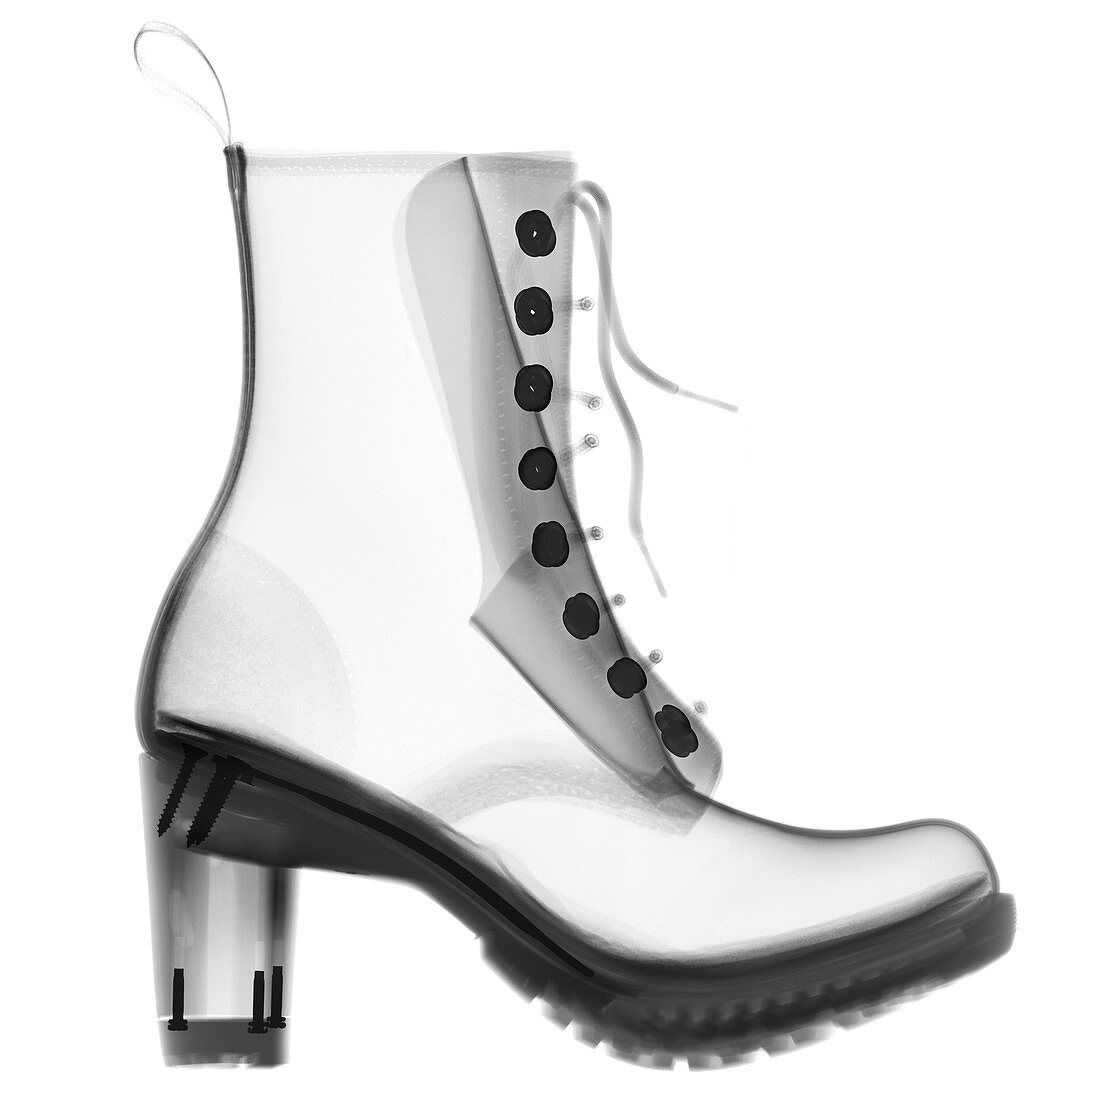 High heel boot, X-ray